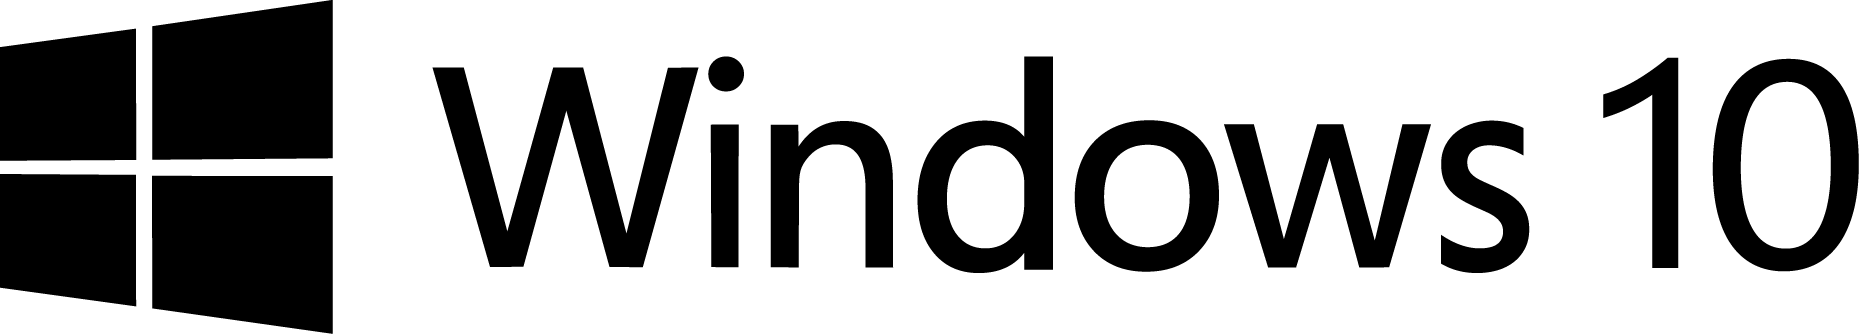 Windows 10 Logo Clipart